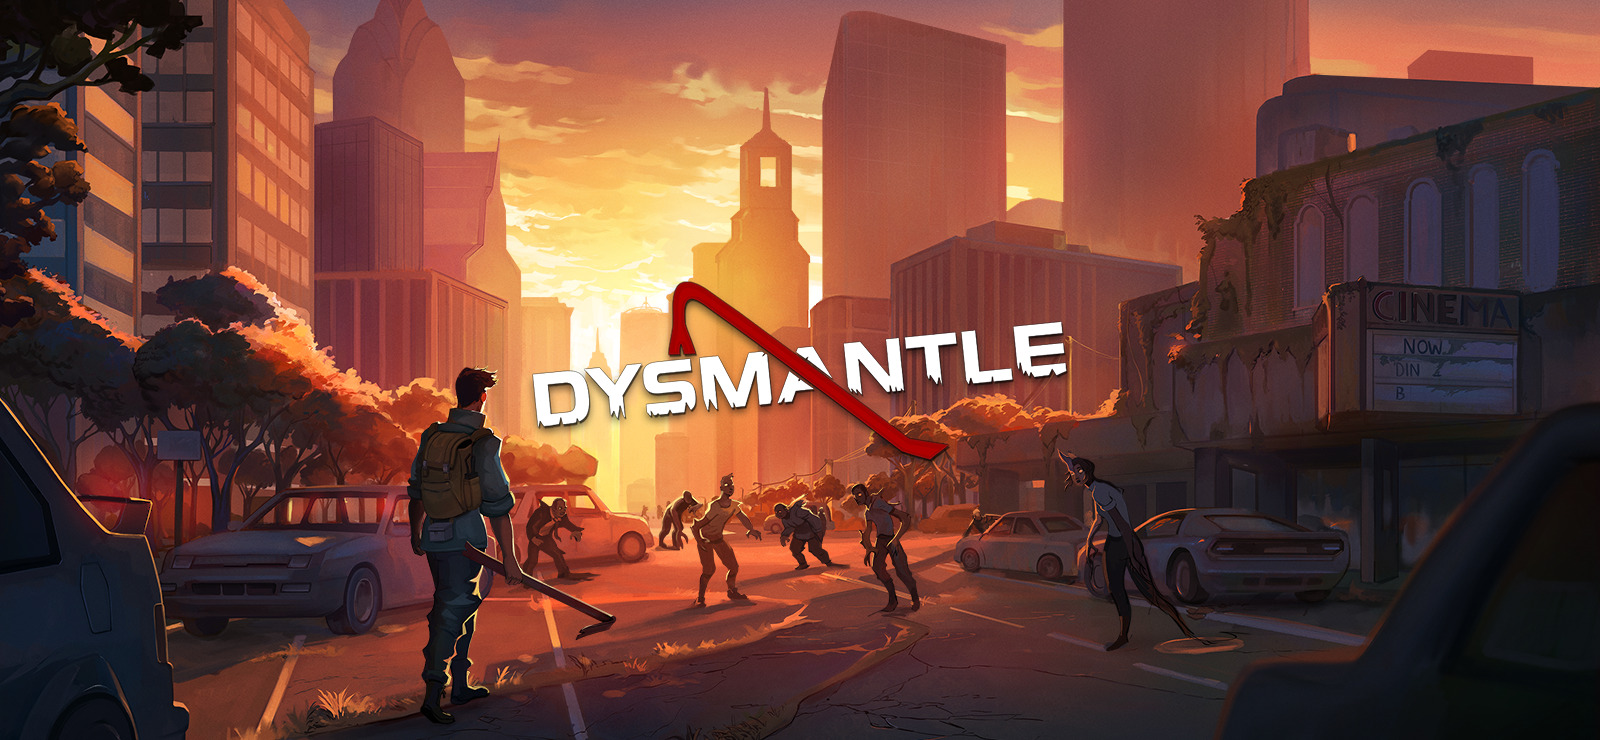 dysmantle review 2021